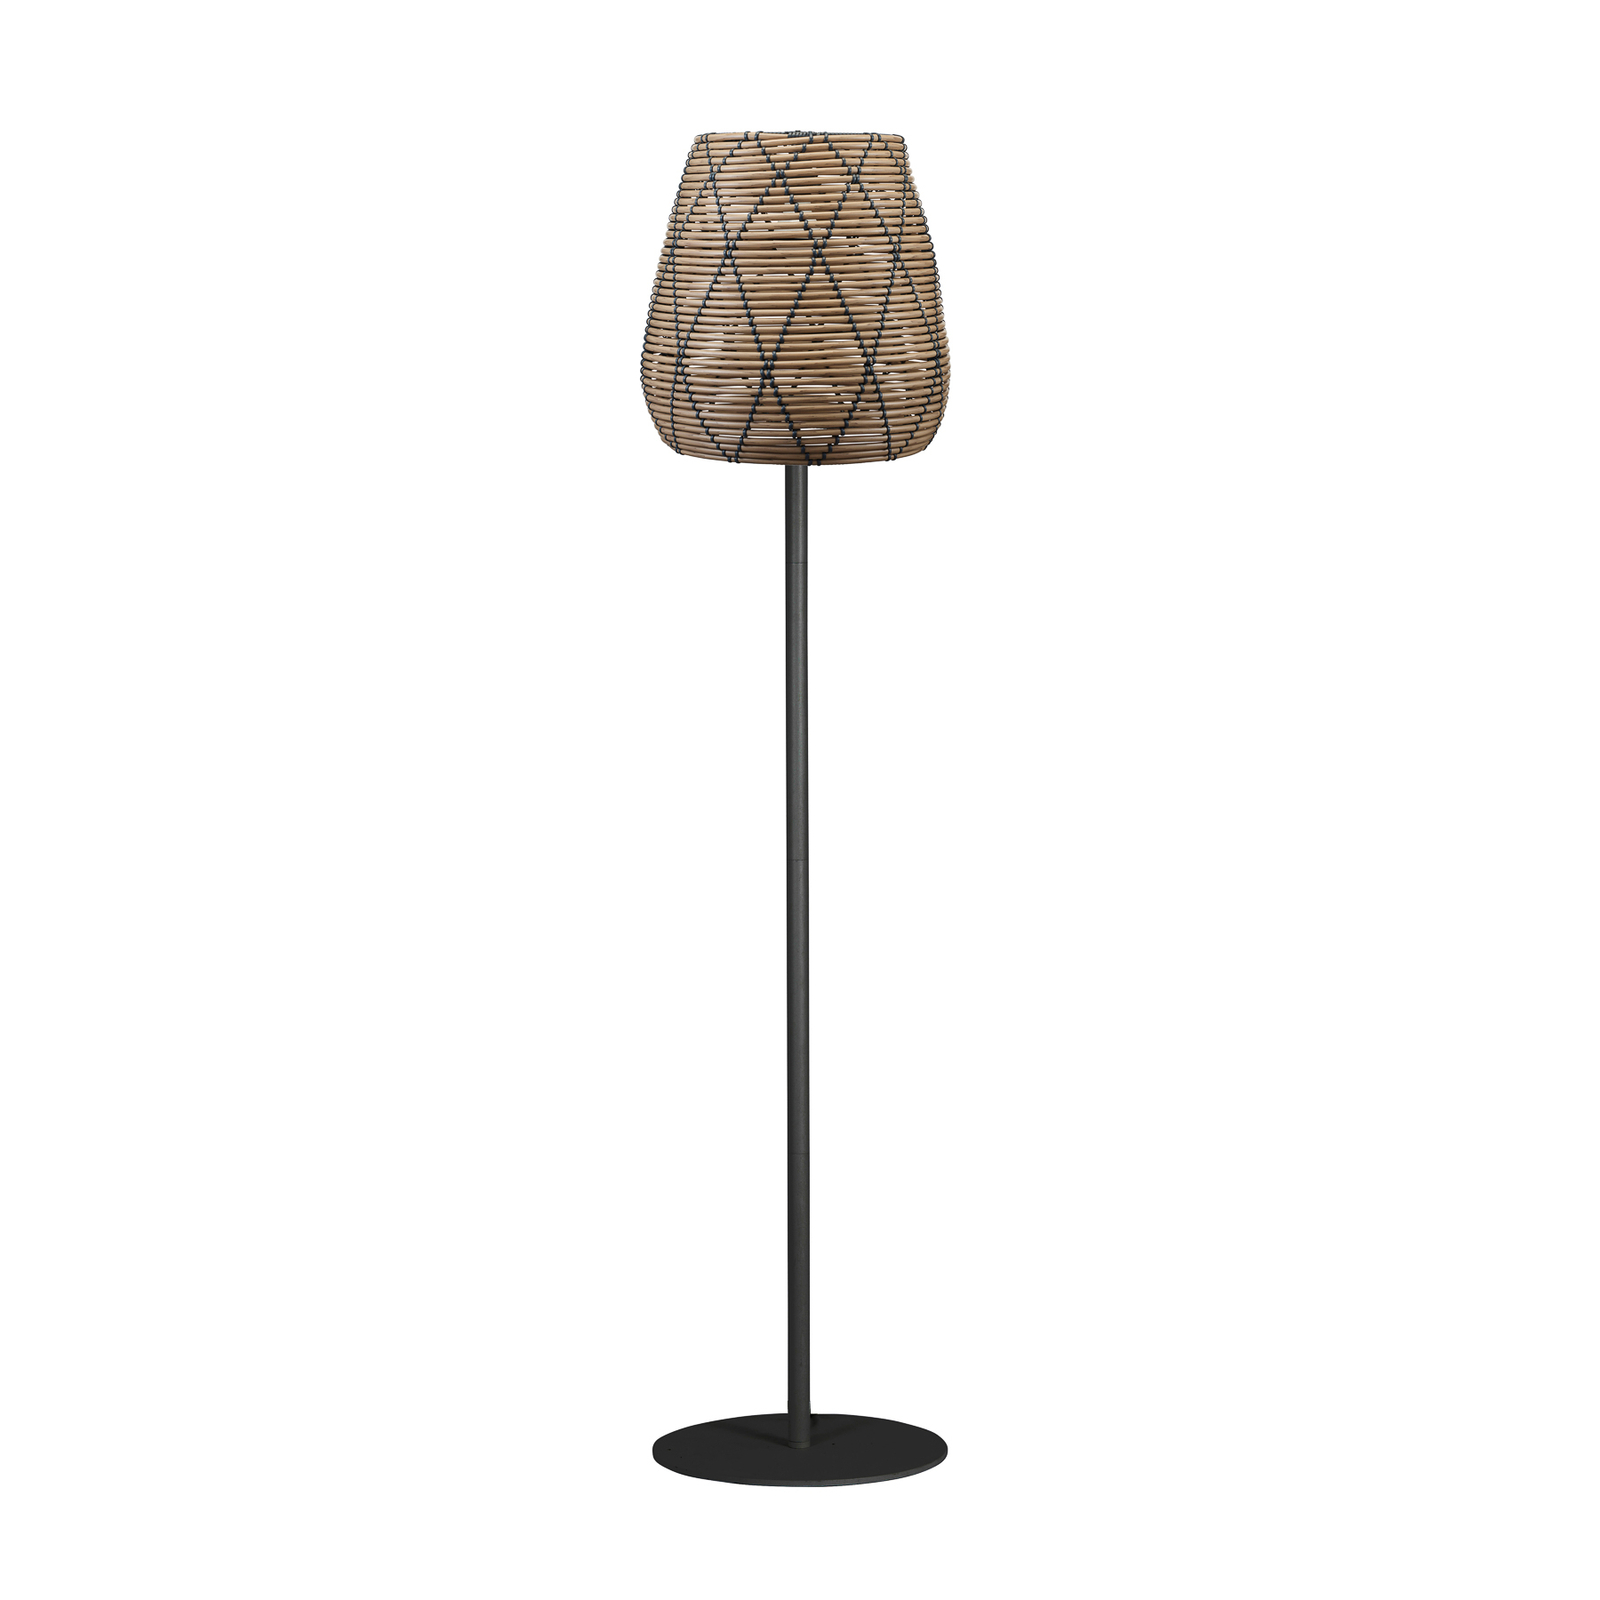 Lampa ogrodowa PR Home Agnar Lollo, szary, rattan, 154 cm